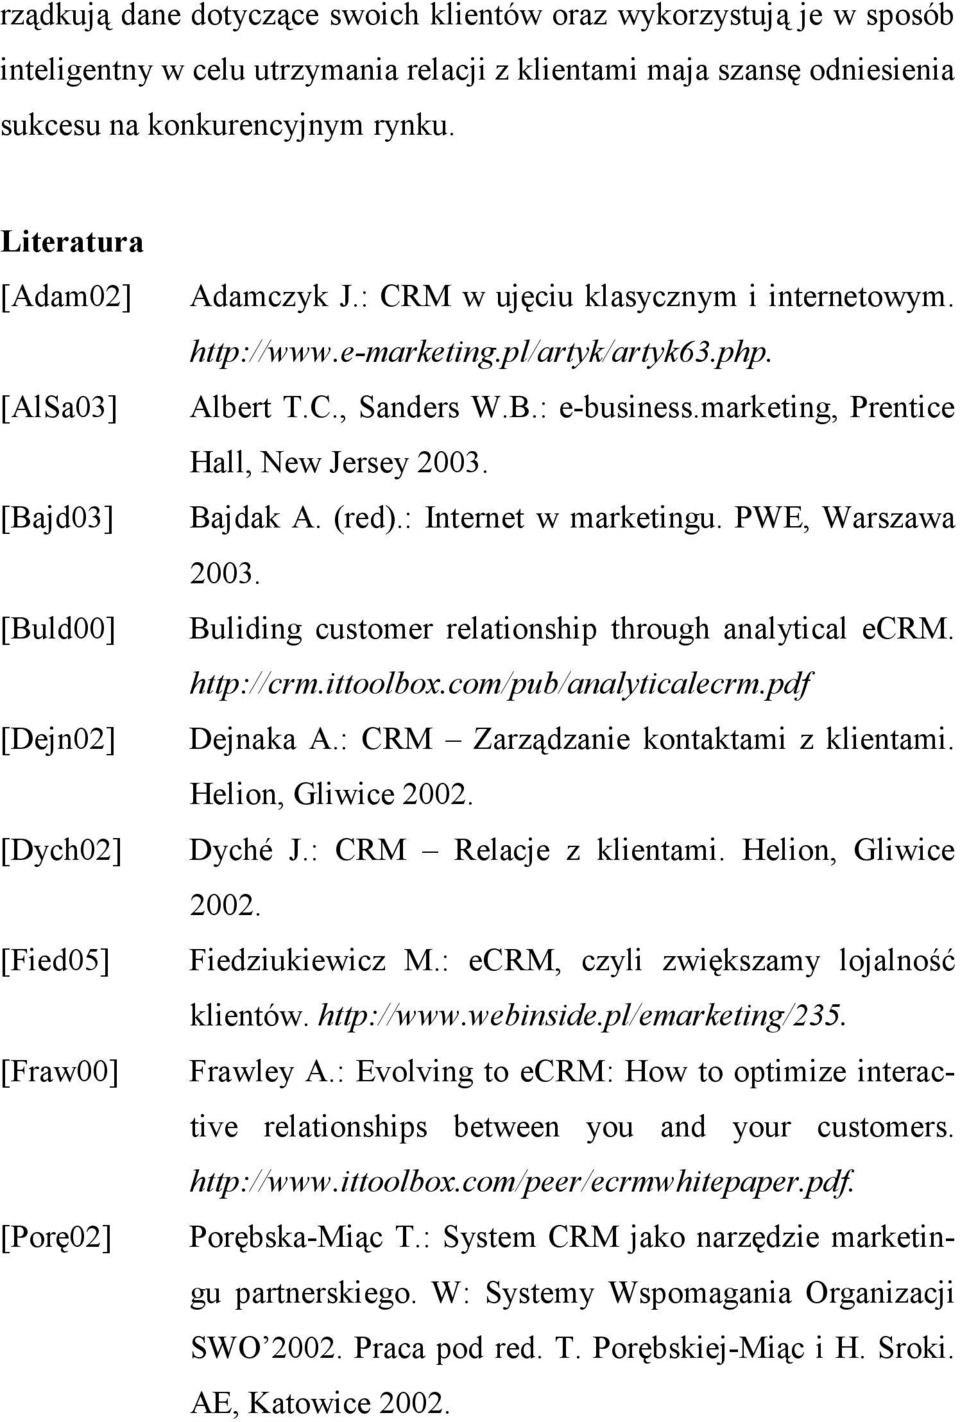 C., Sanders W.B.: e-business.marketing, Prentice Hall, New Jersey 2003. Bajdak A. (red).: Internet w marketingu. PWE, Warszawa 2003. Buliding customer relationship through analytical ecrm. http://crm.